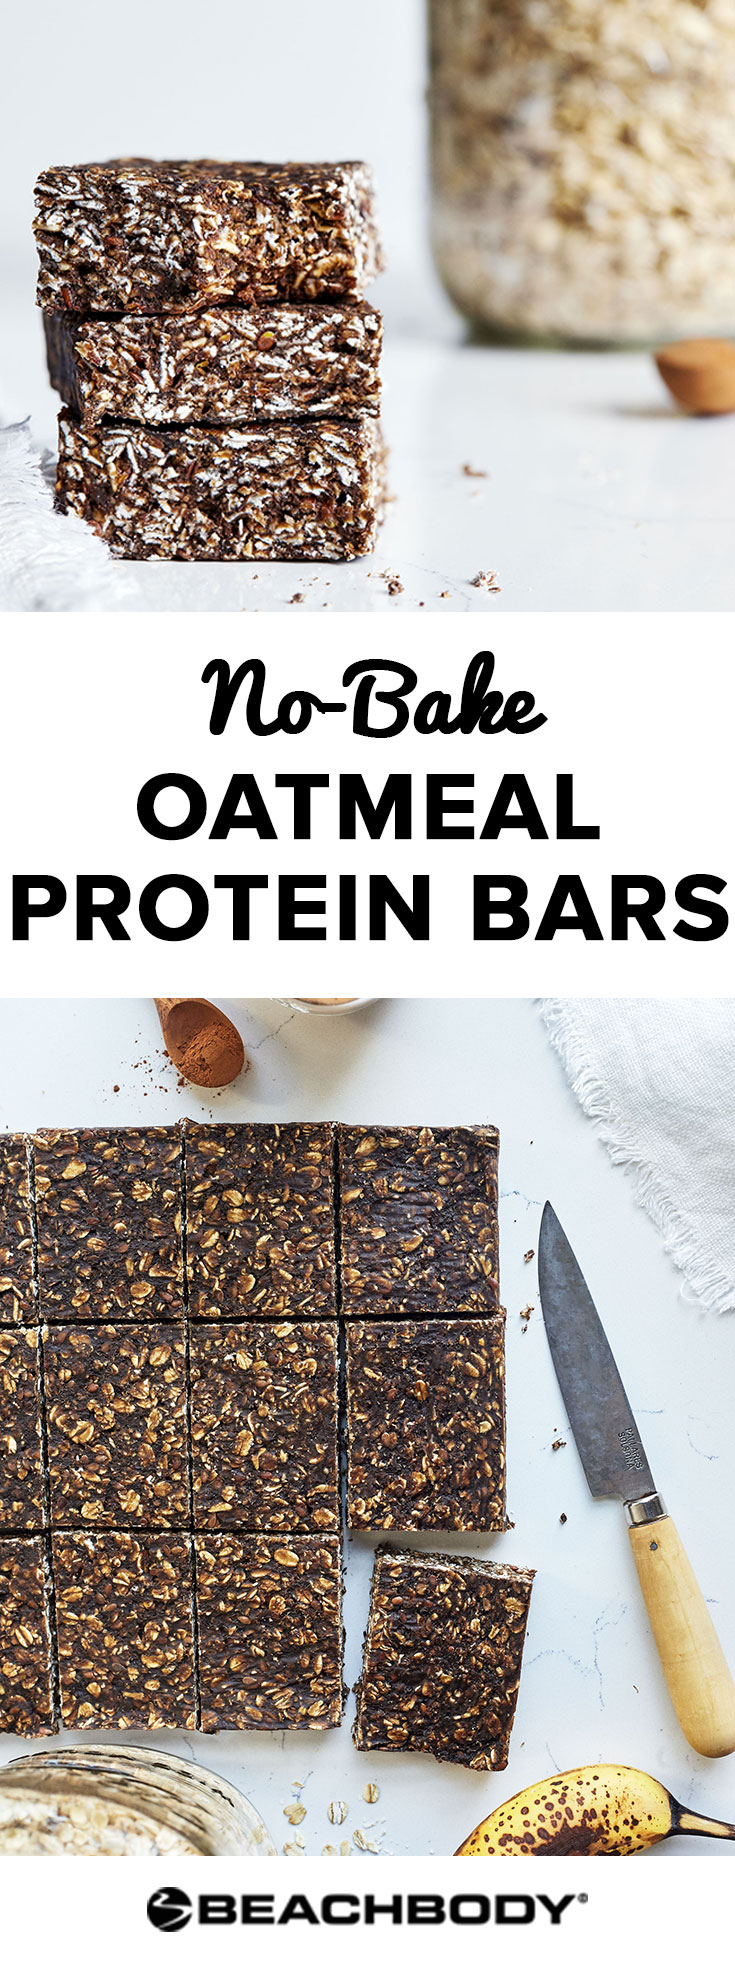 No-Bake Oatmeal Protein Bars